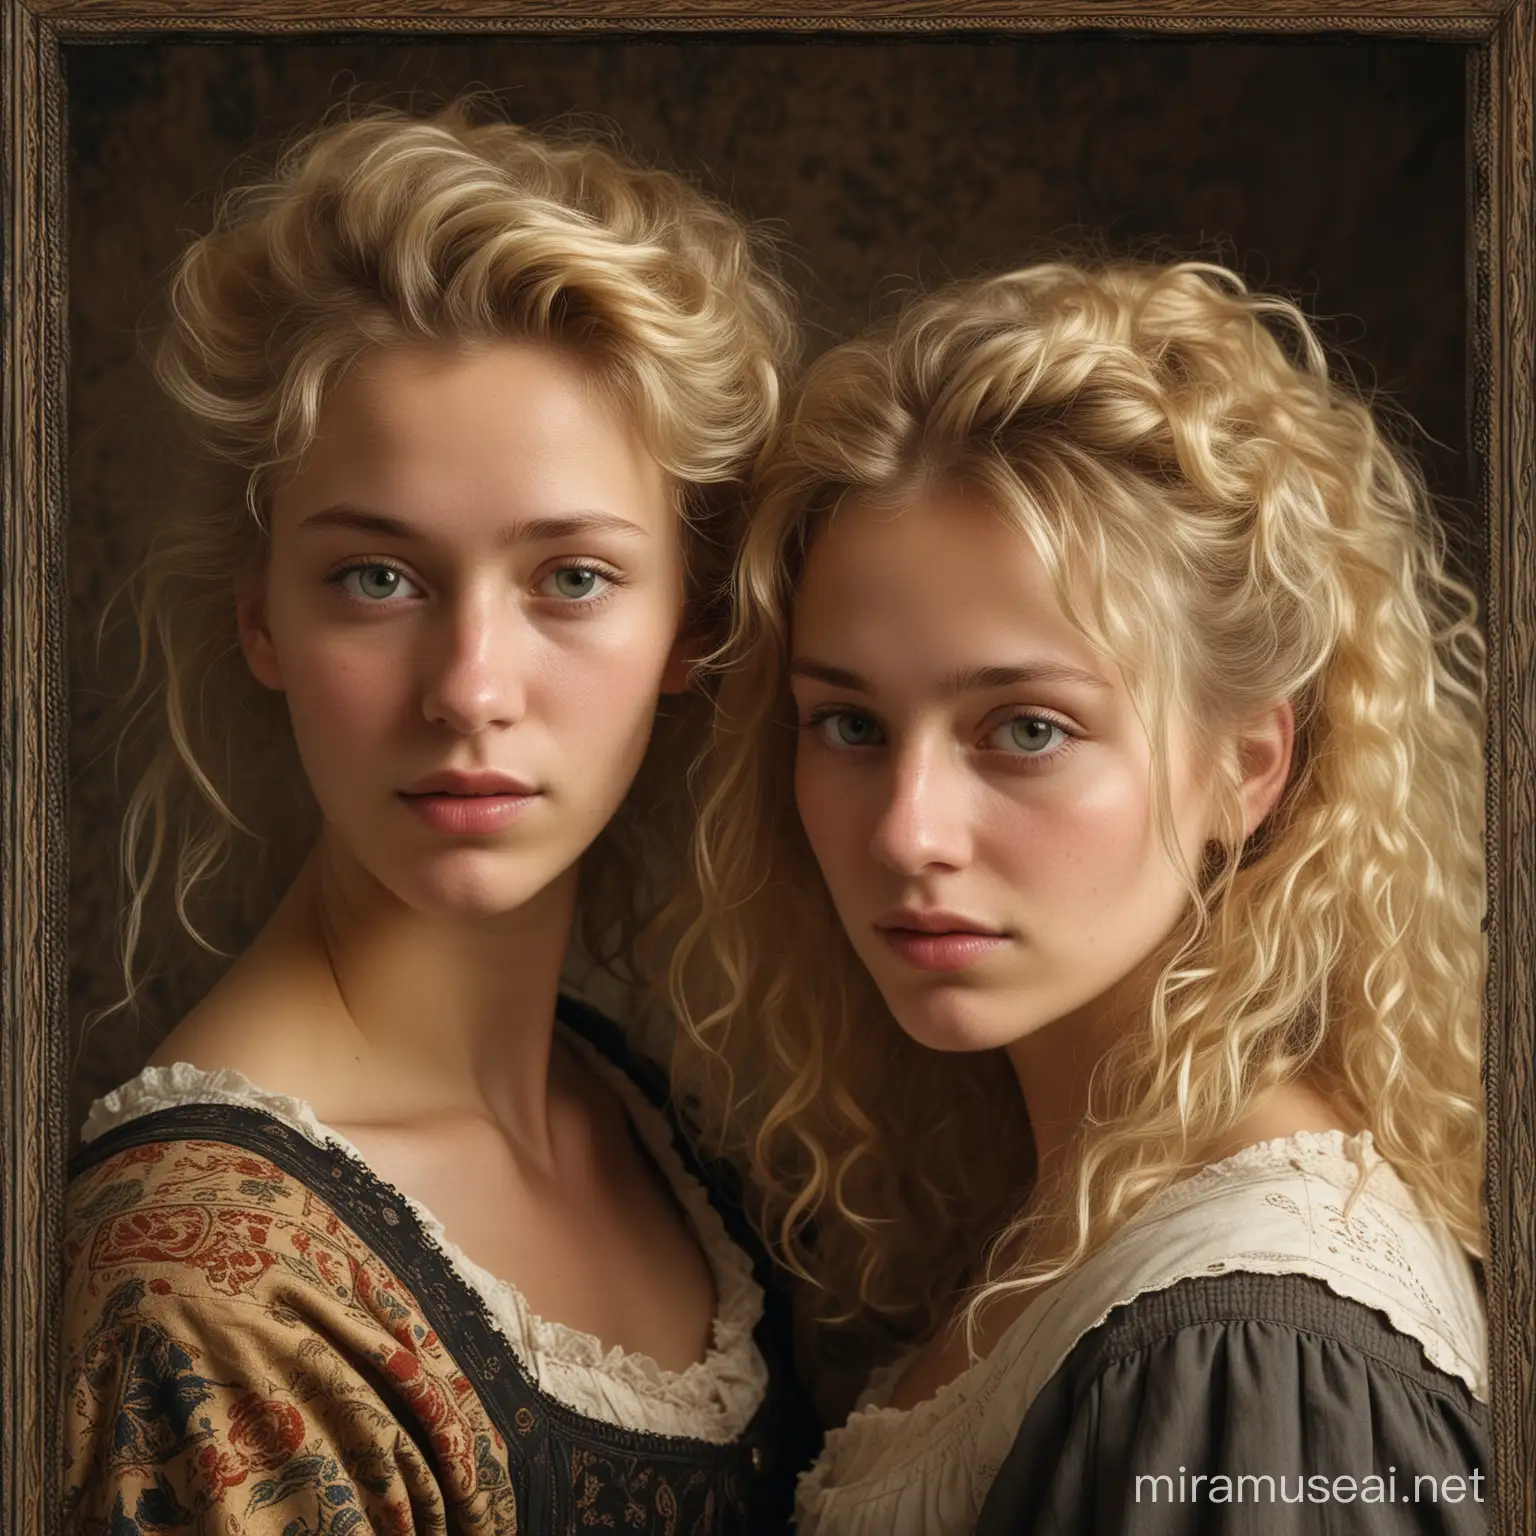 Youthful Flemish Peasants Golden Blonde Tresses and Tattered Elegance